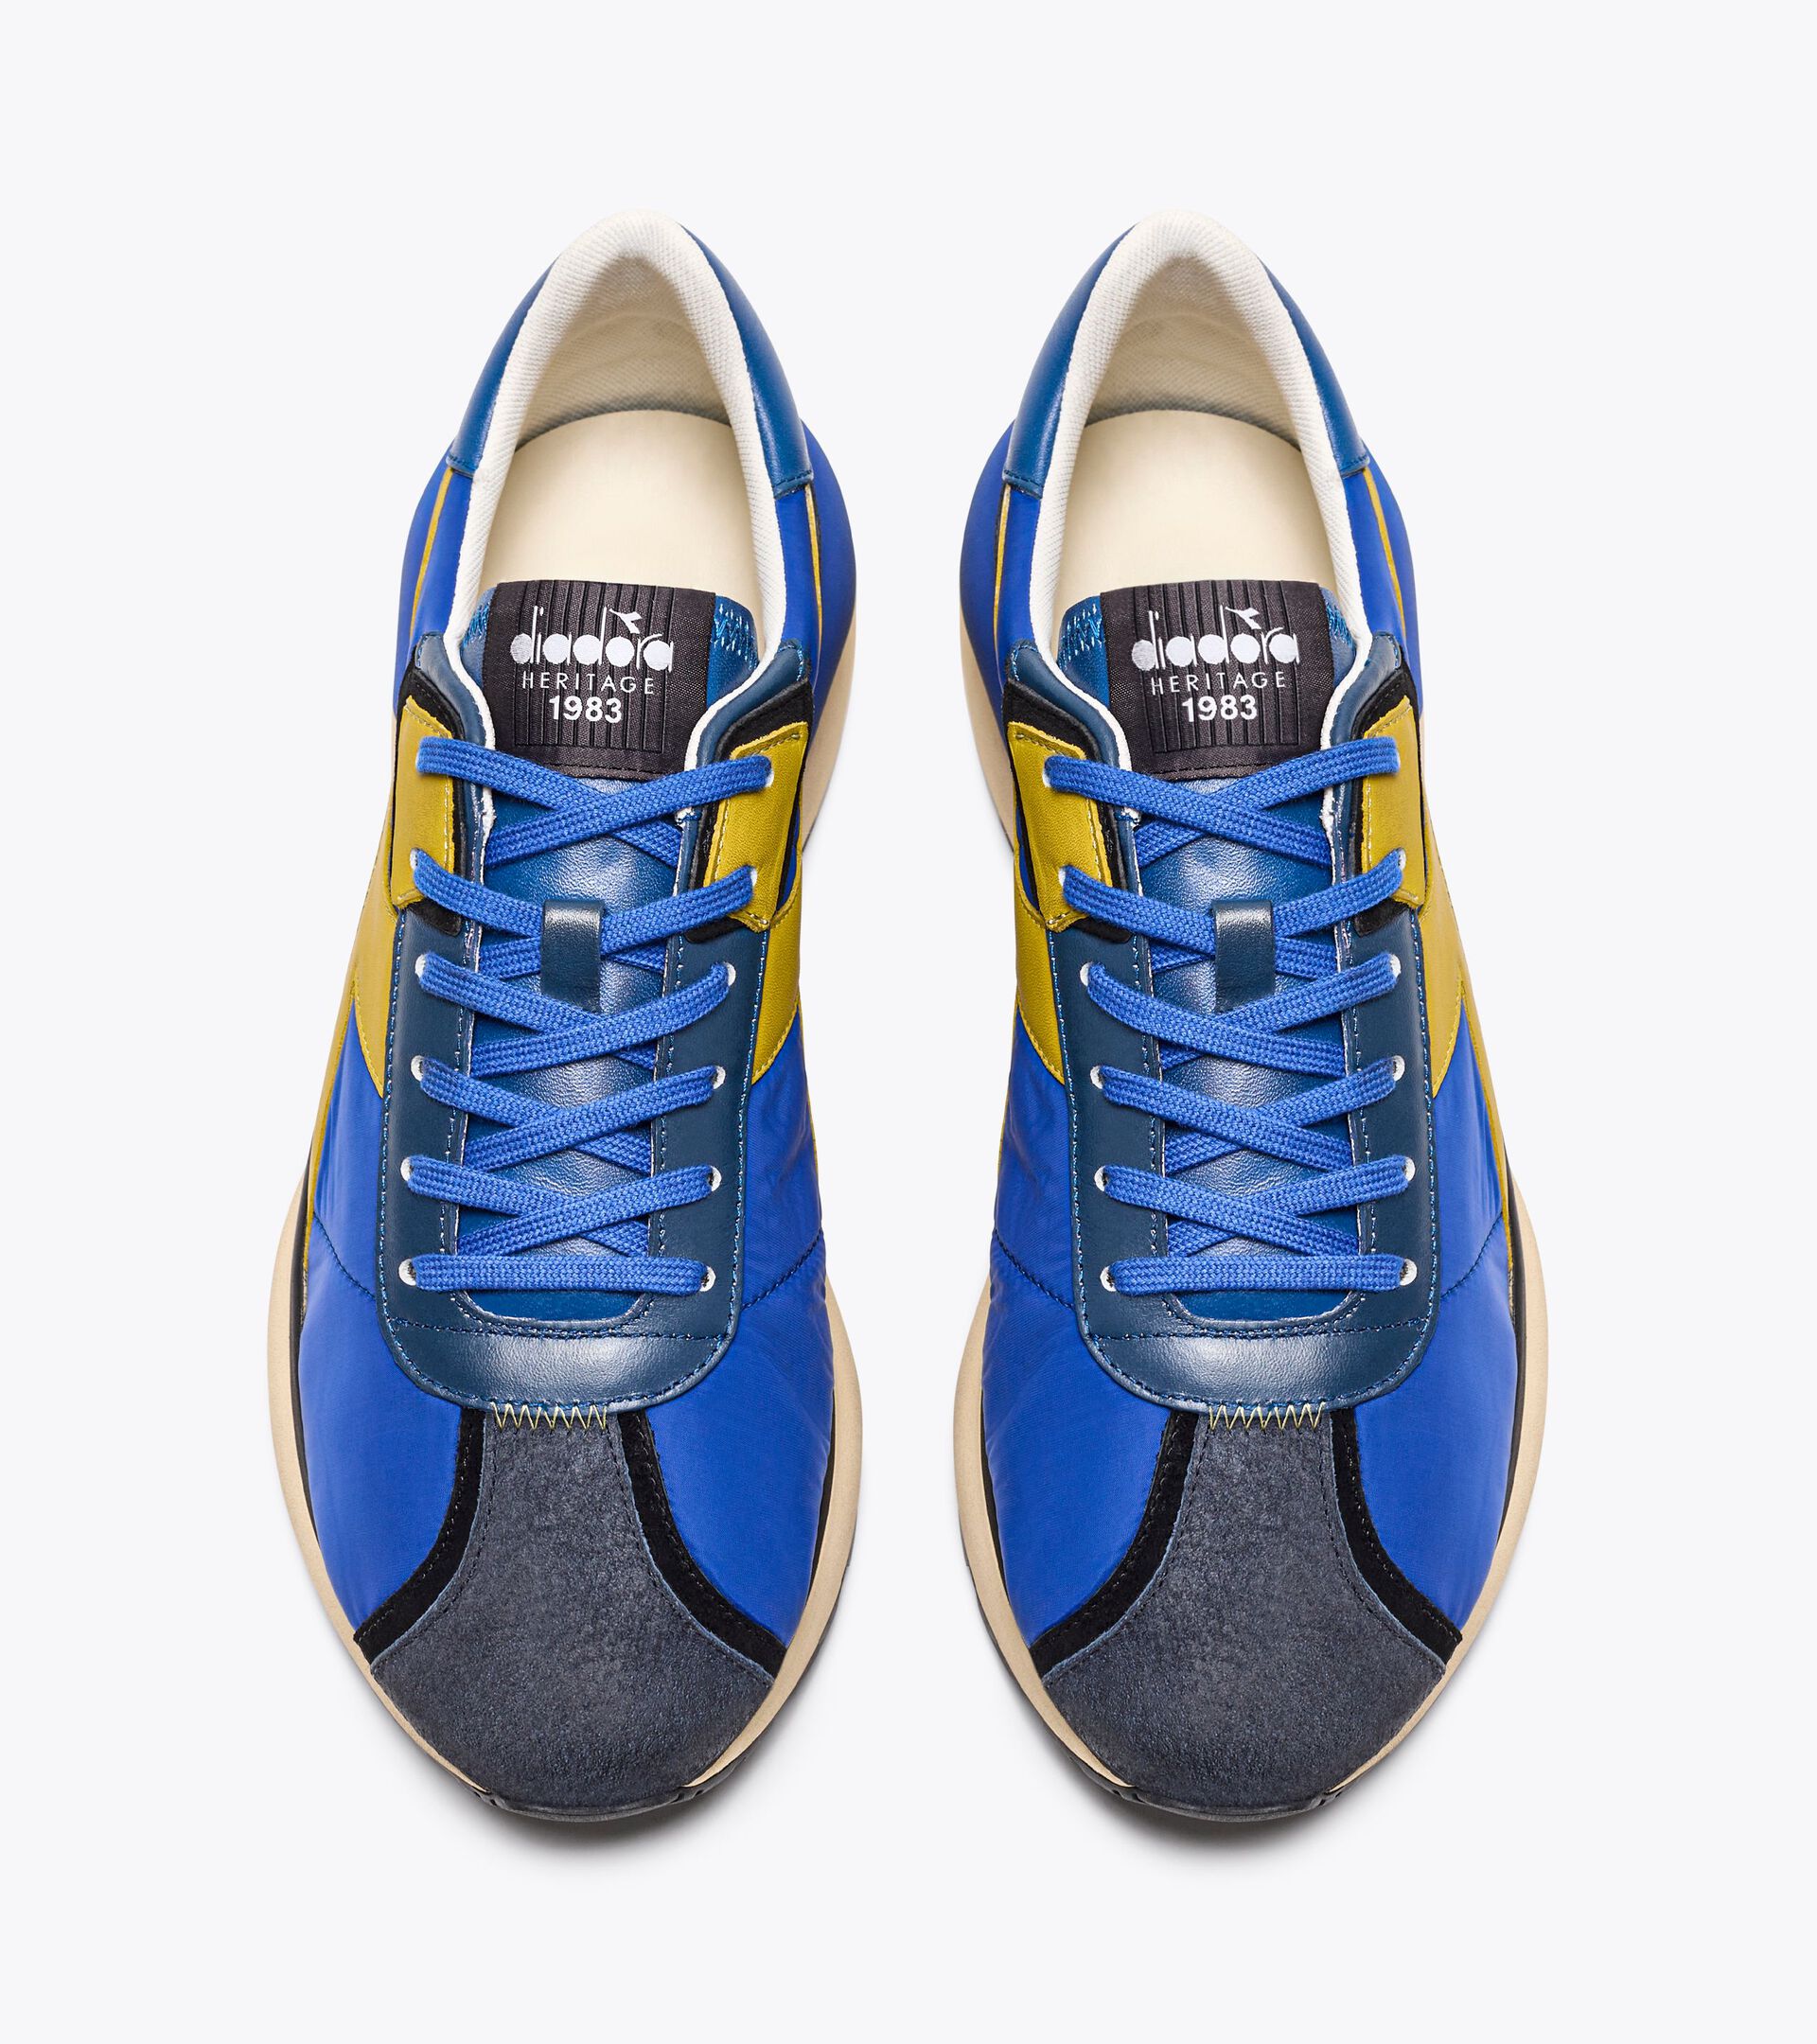 Heritage sneaker - Gender Neutral MERCURY ELITE BLUE REGISTA - Diadora